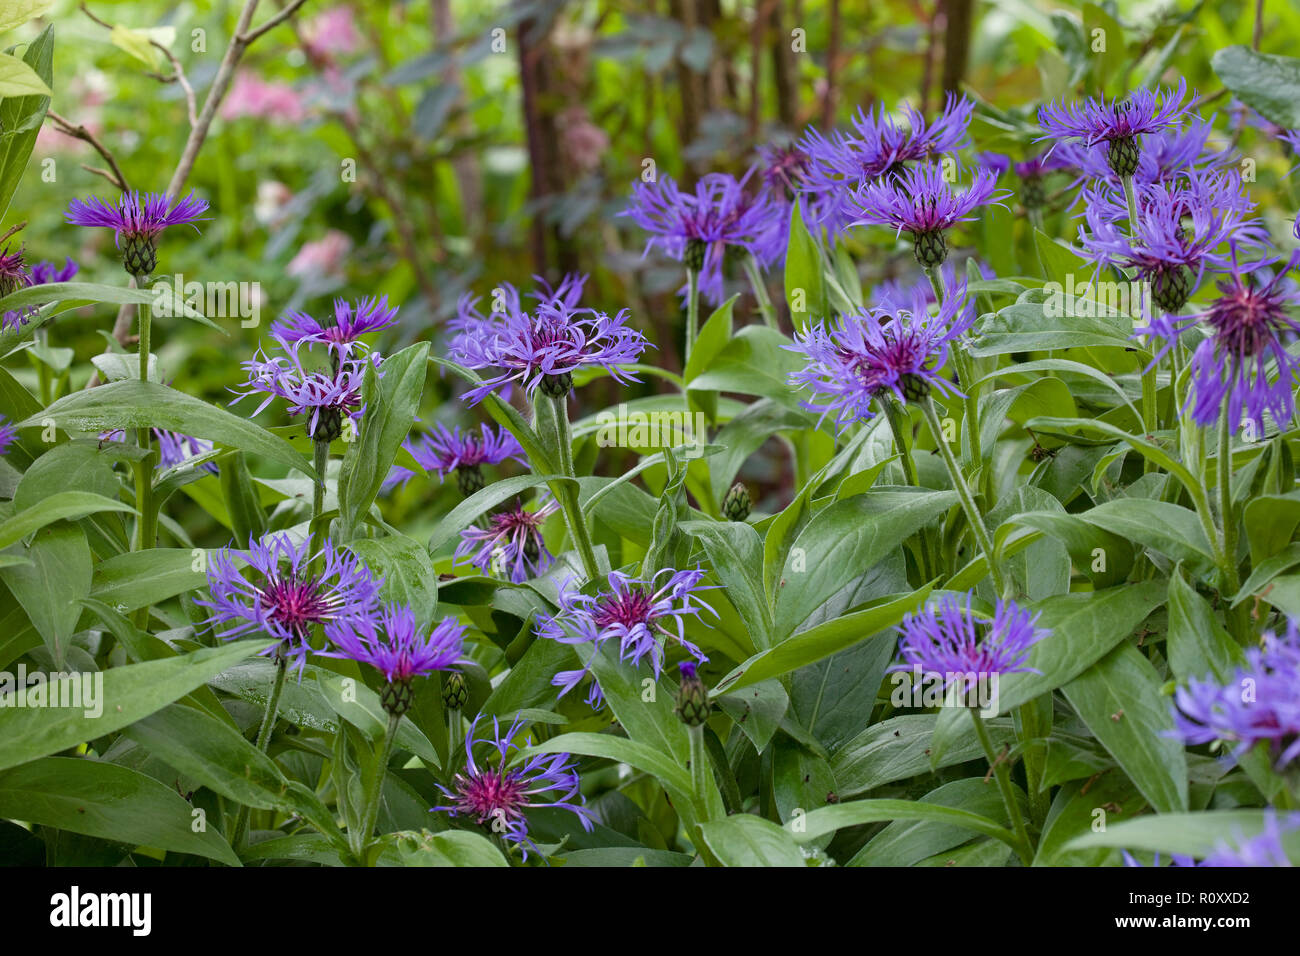 Centaurea montana flowering plants Stock Photo